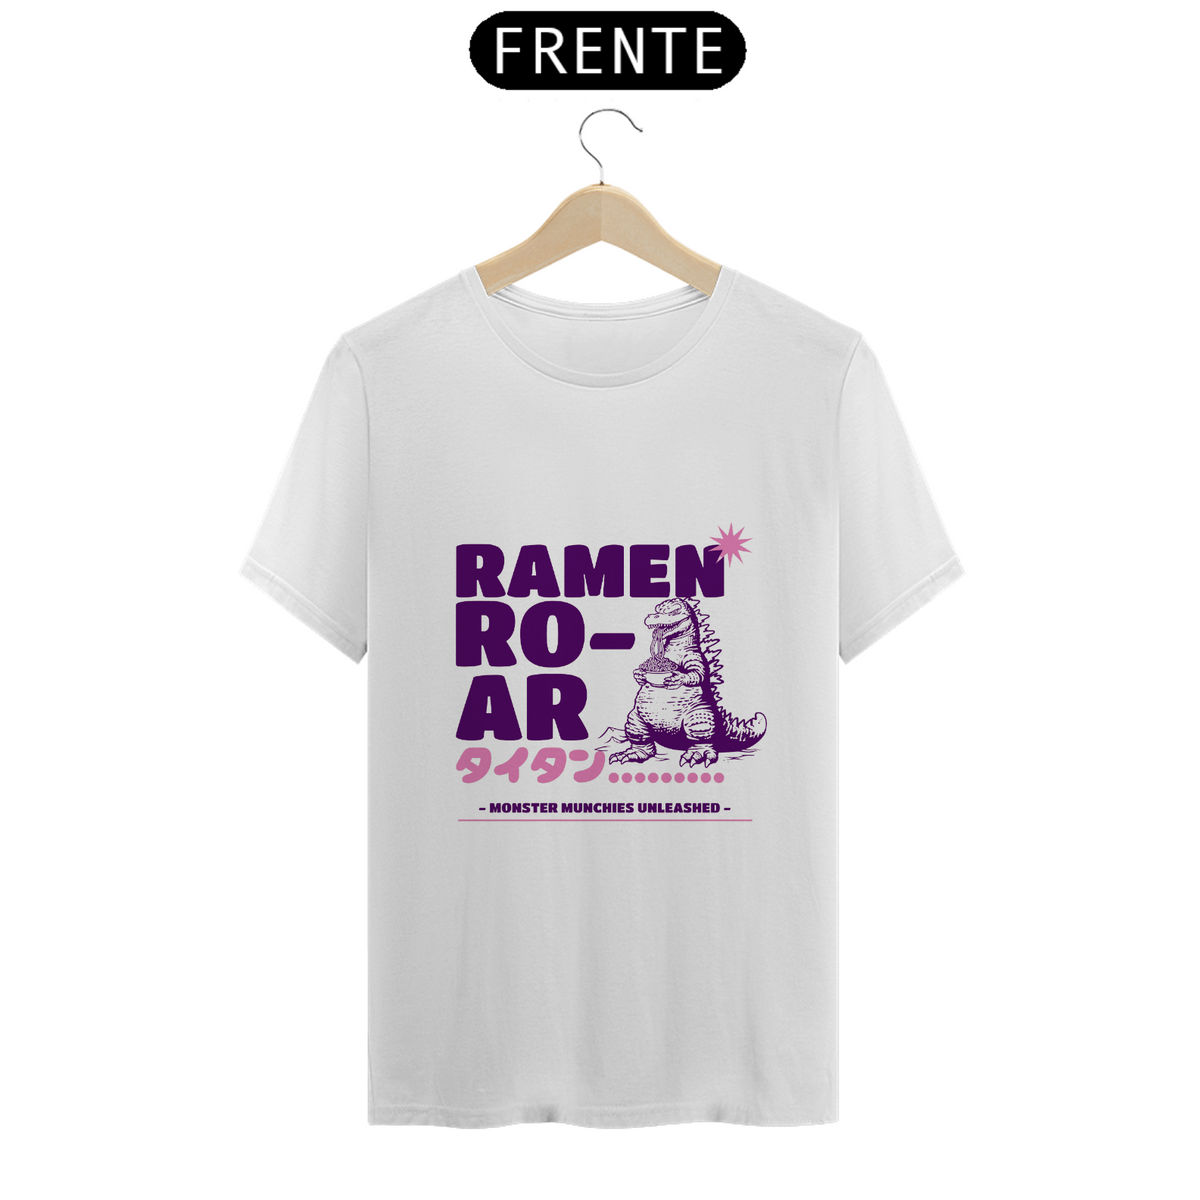 Nome do produto: T-shirt - Ramen Ro-ar 